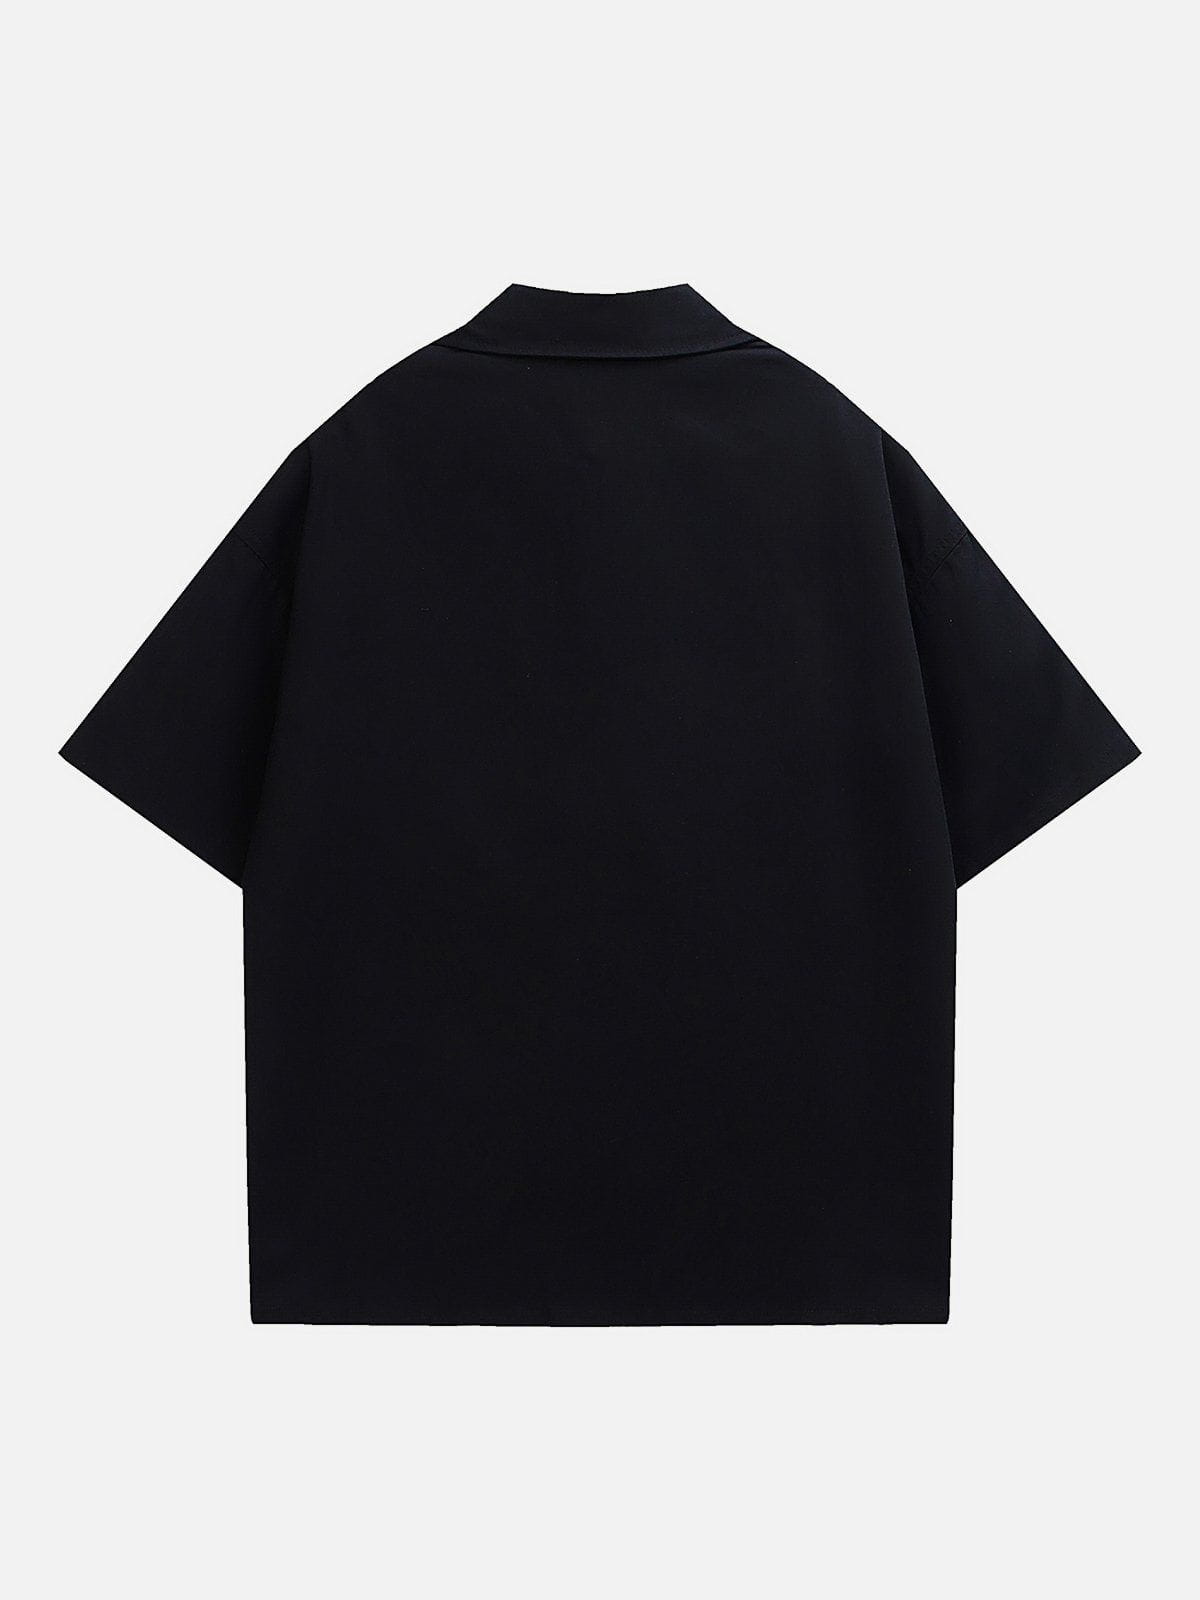 Eprezzy® - Linear Monogram Print Short Sleeve Shirts Streetwear Fashion - eprezzy.com